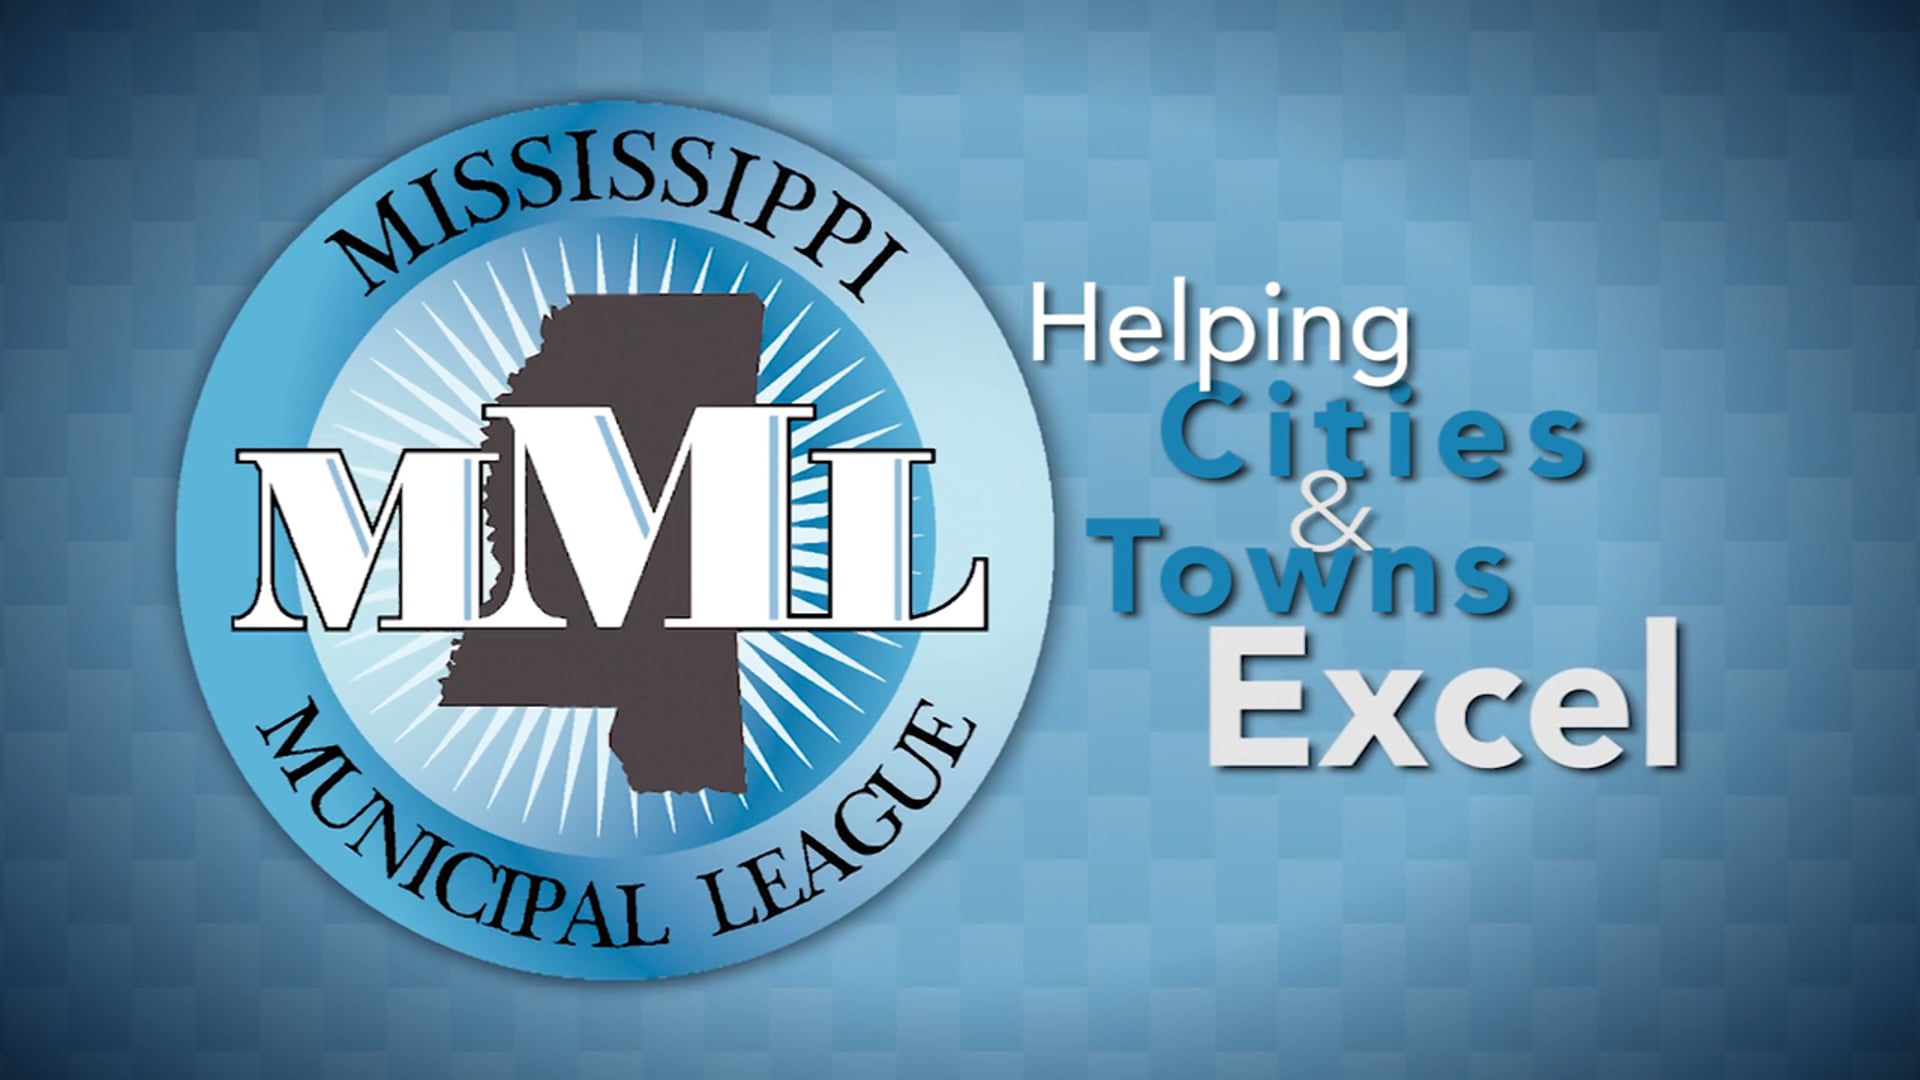 Mississippi Municipal League Promotional